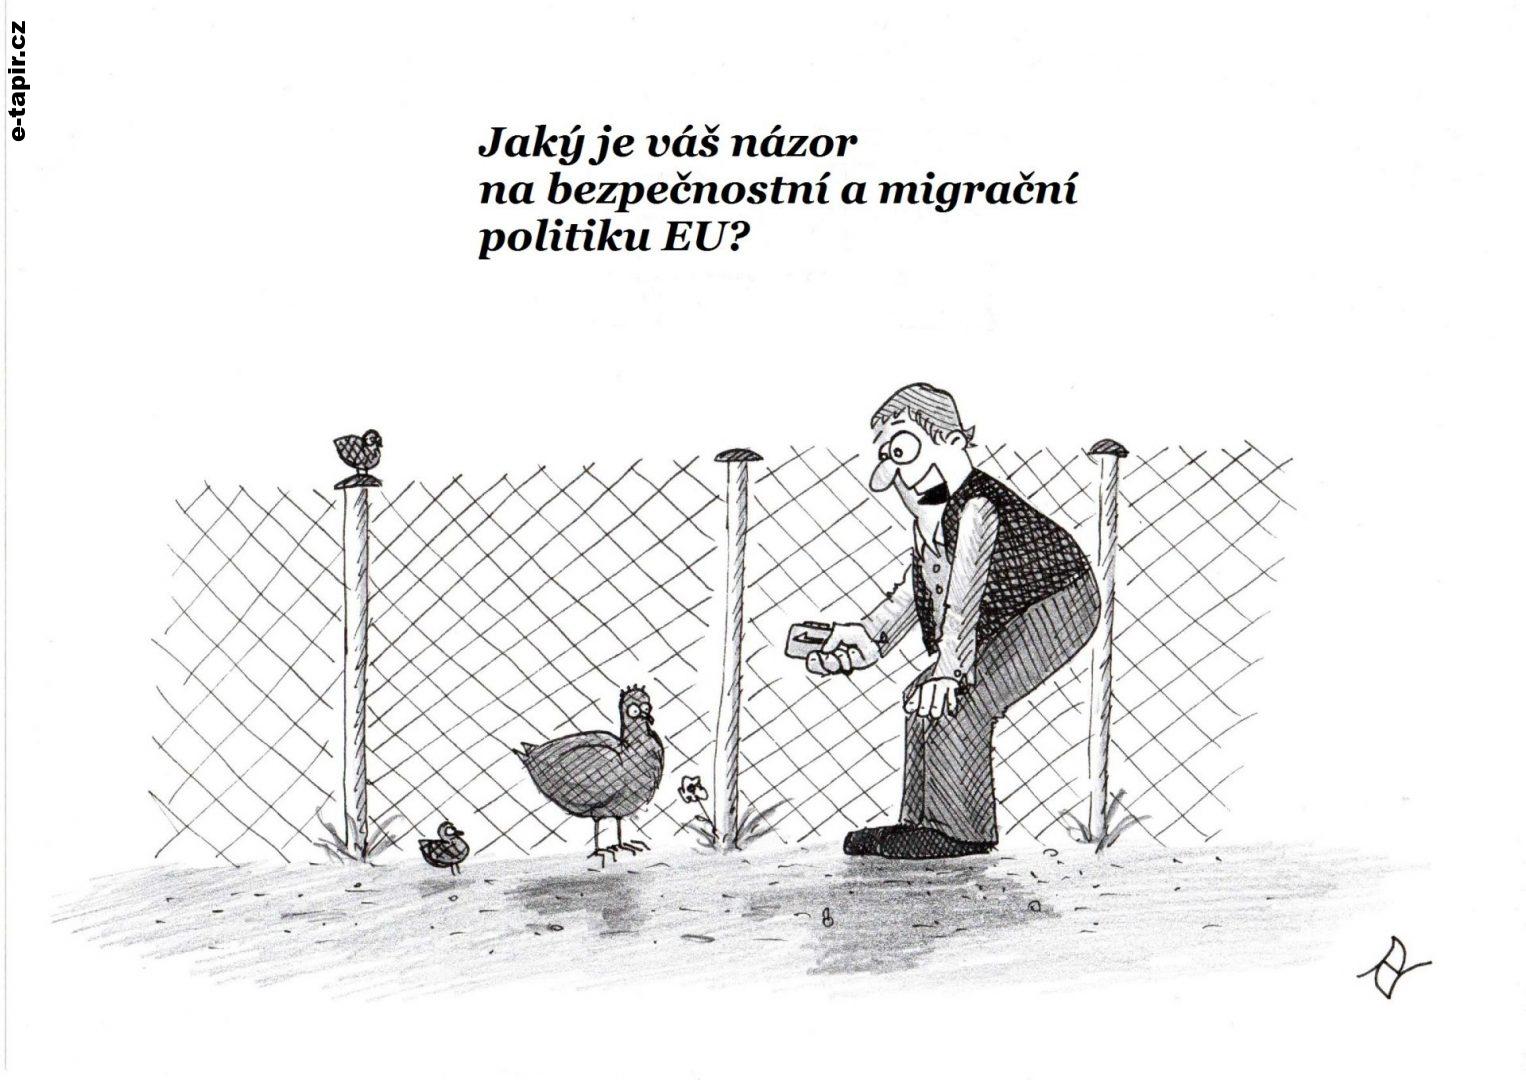 img-migrační politika EU-stx-cz-441976fa